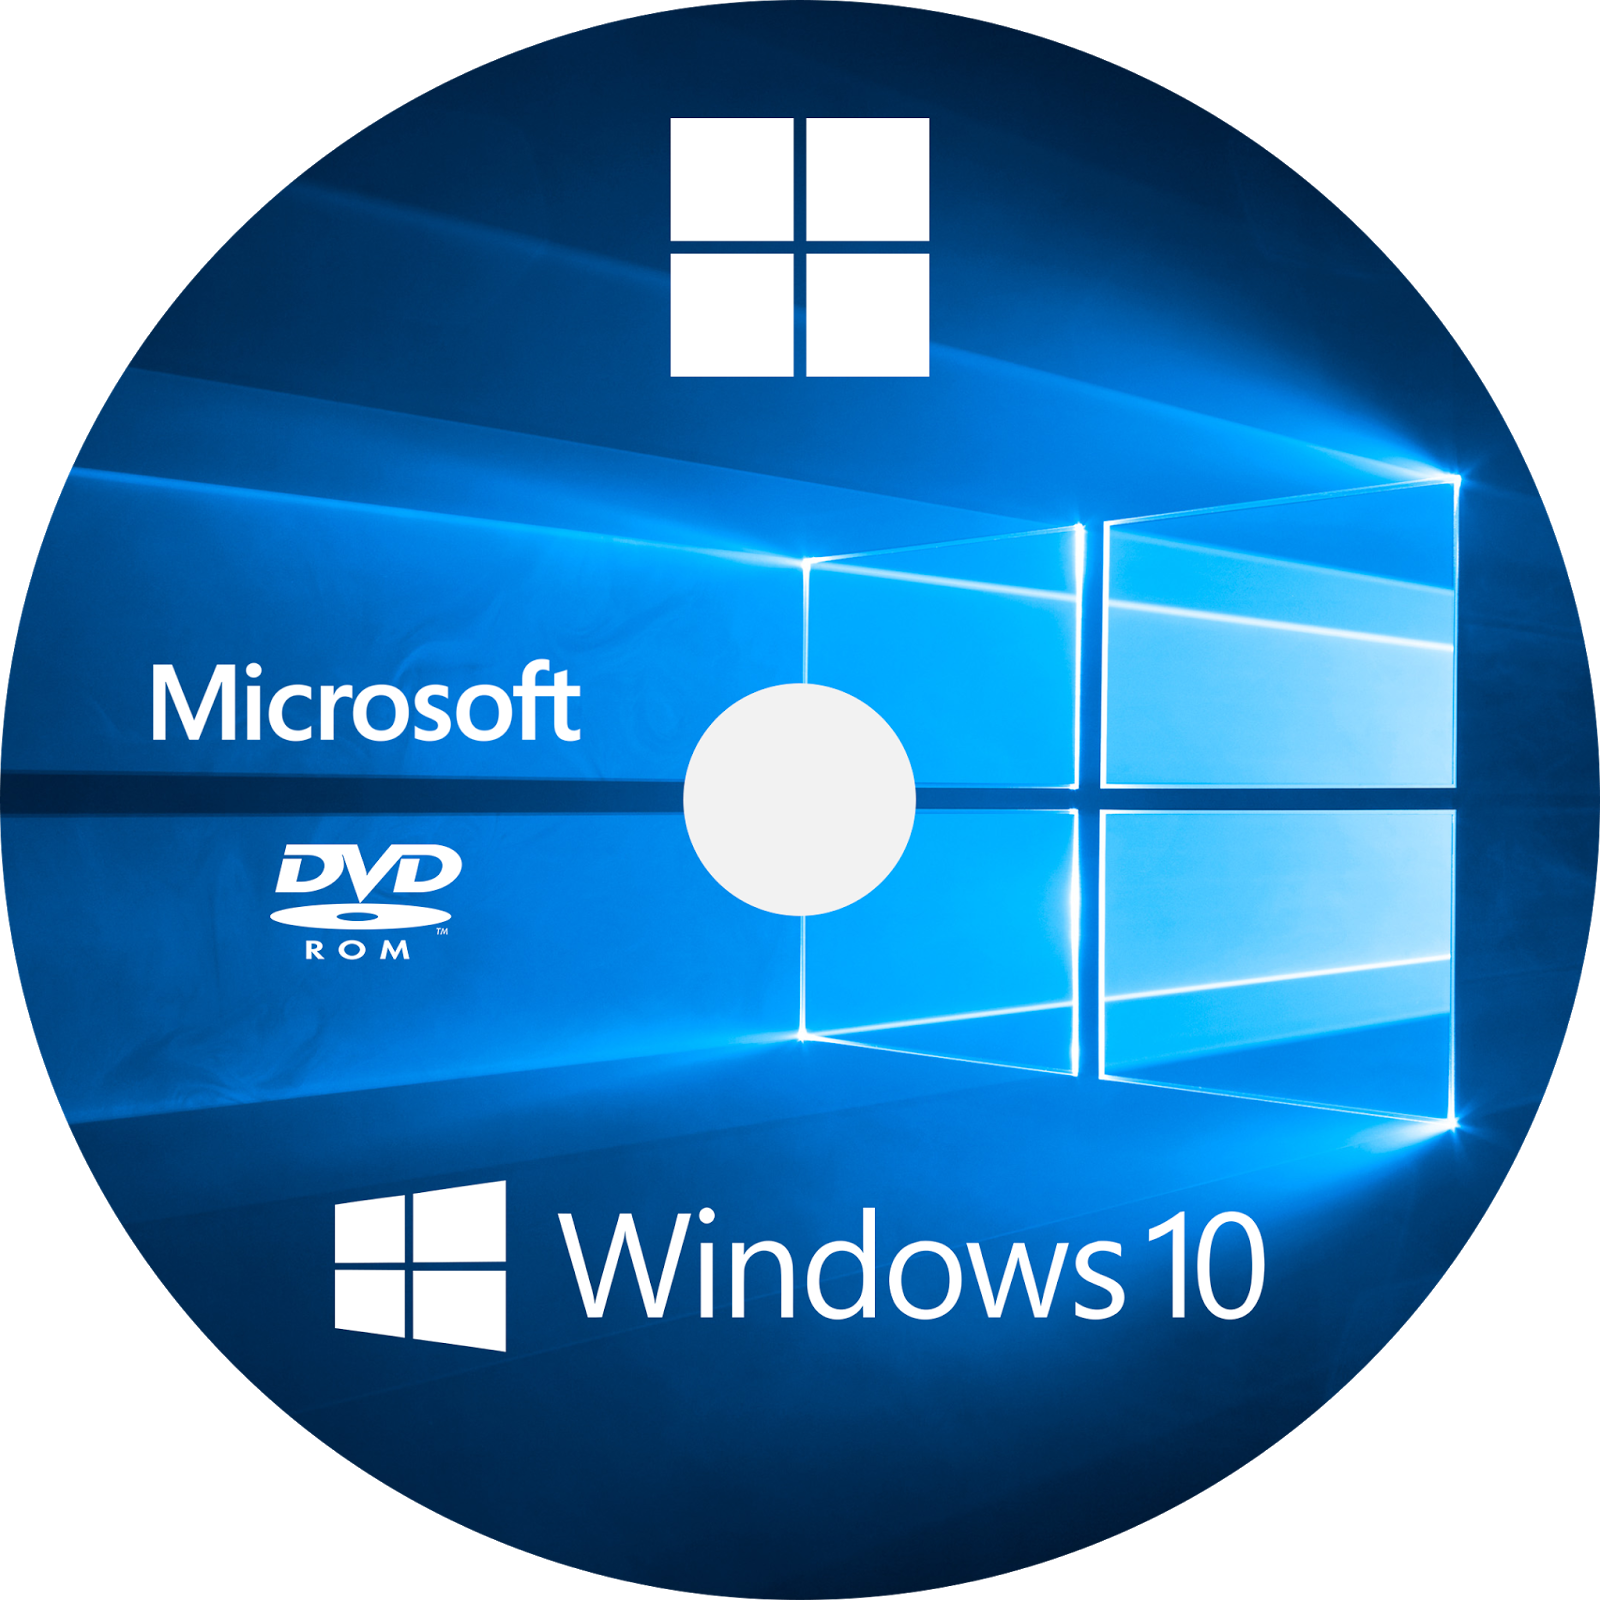 Microsoft Windows Program To Buy